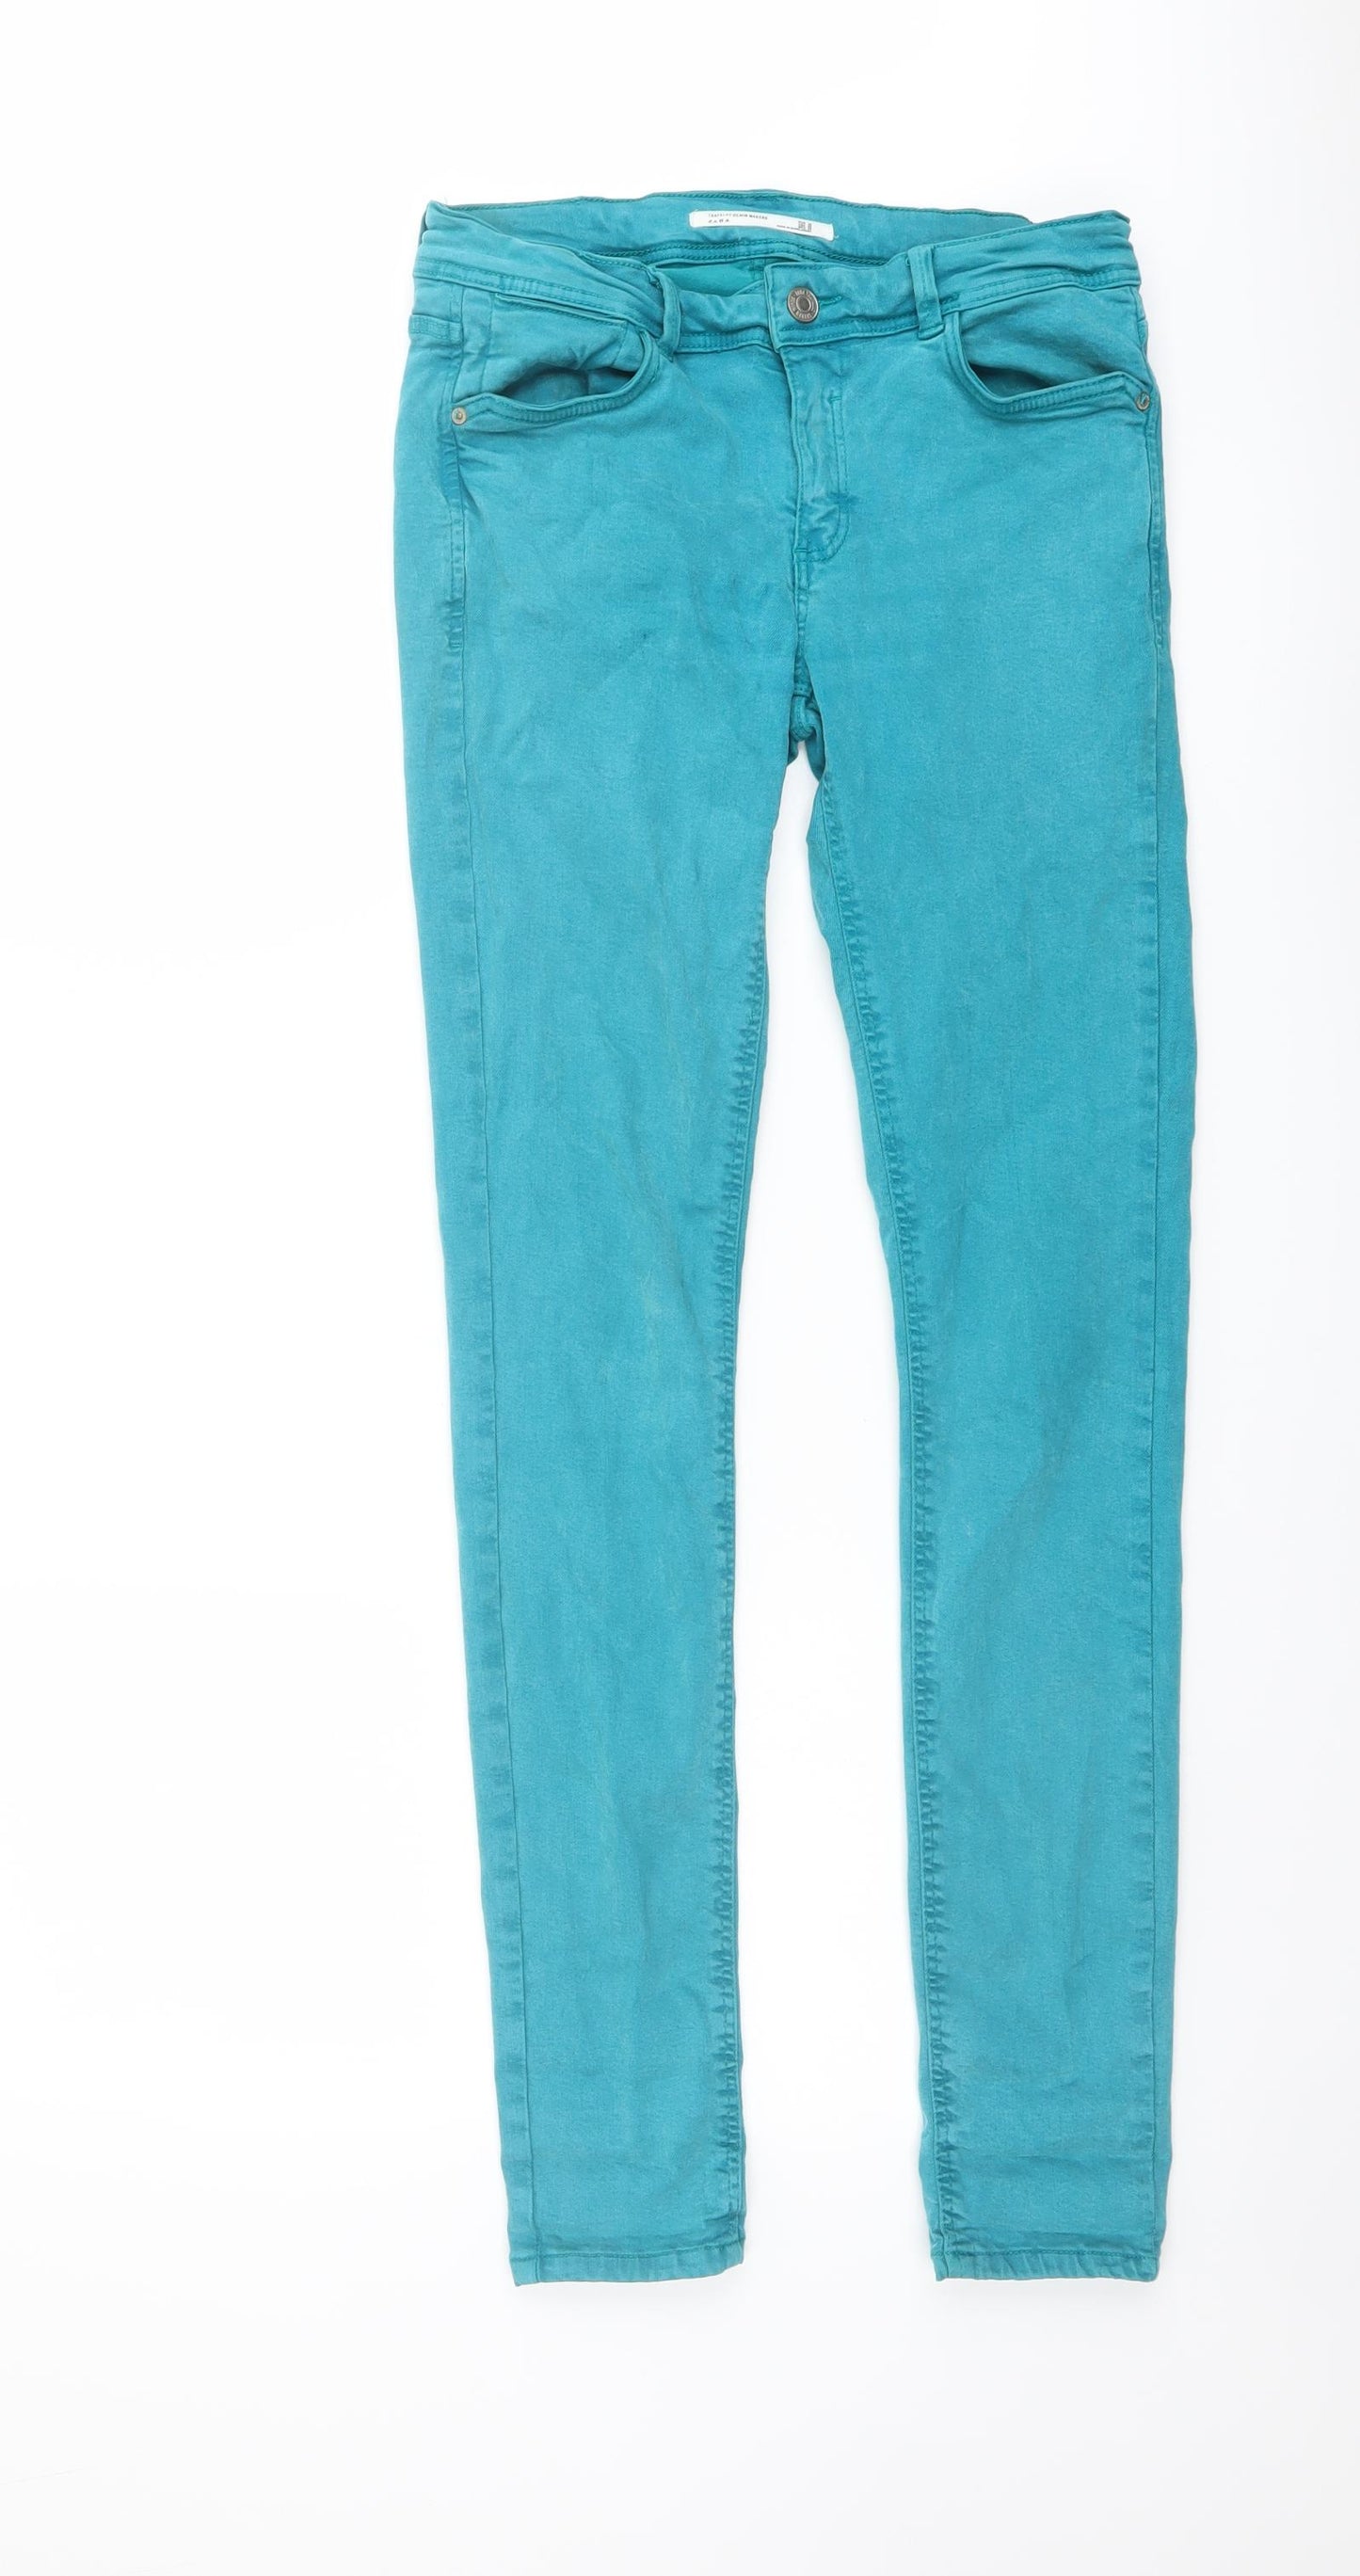 Zara Womens Green Cotton Straight Jeans Size 10 L30 in Regular Button